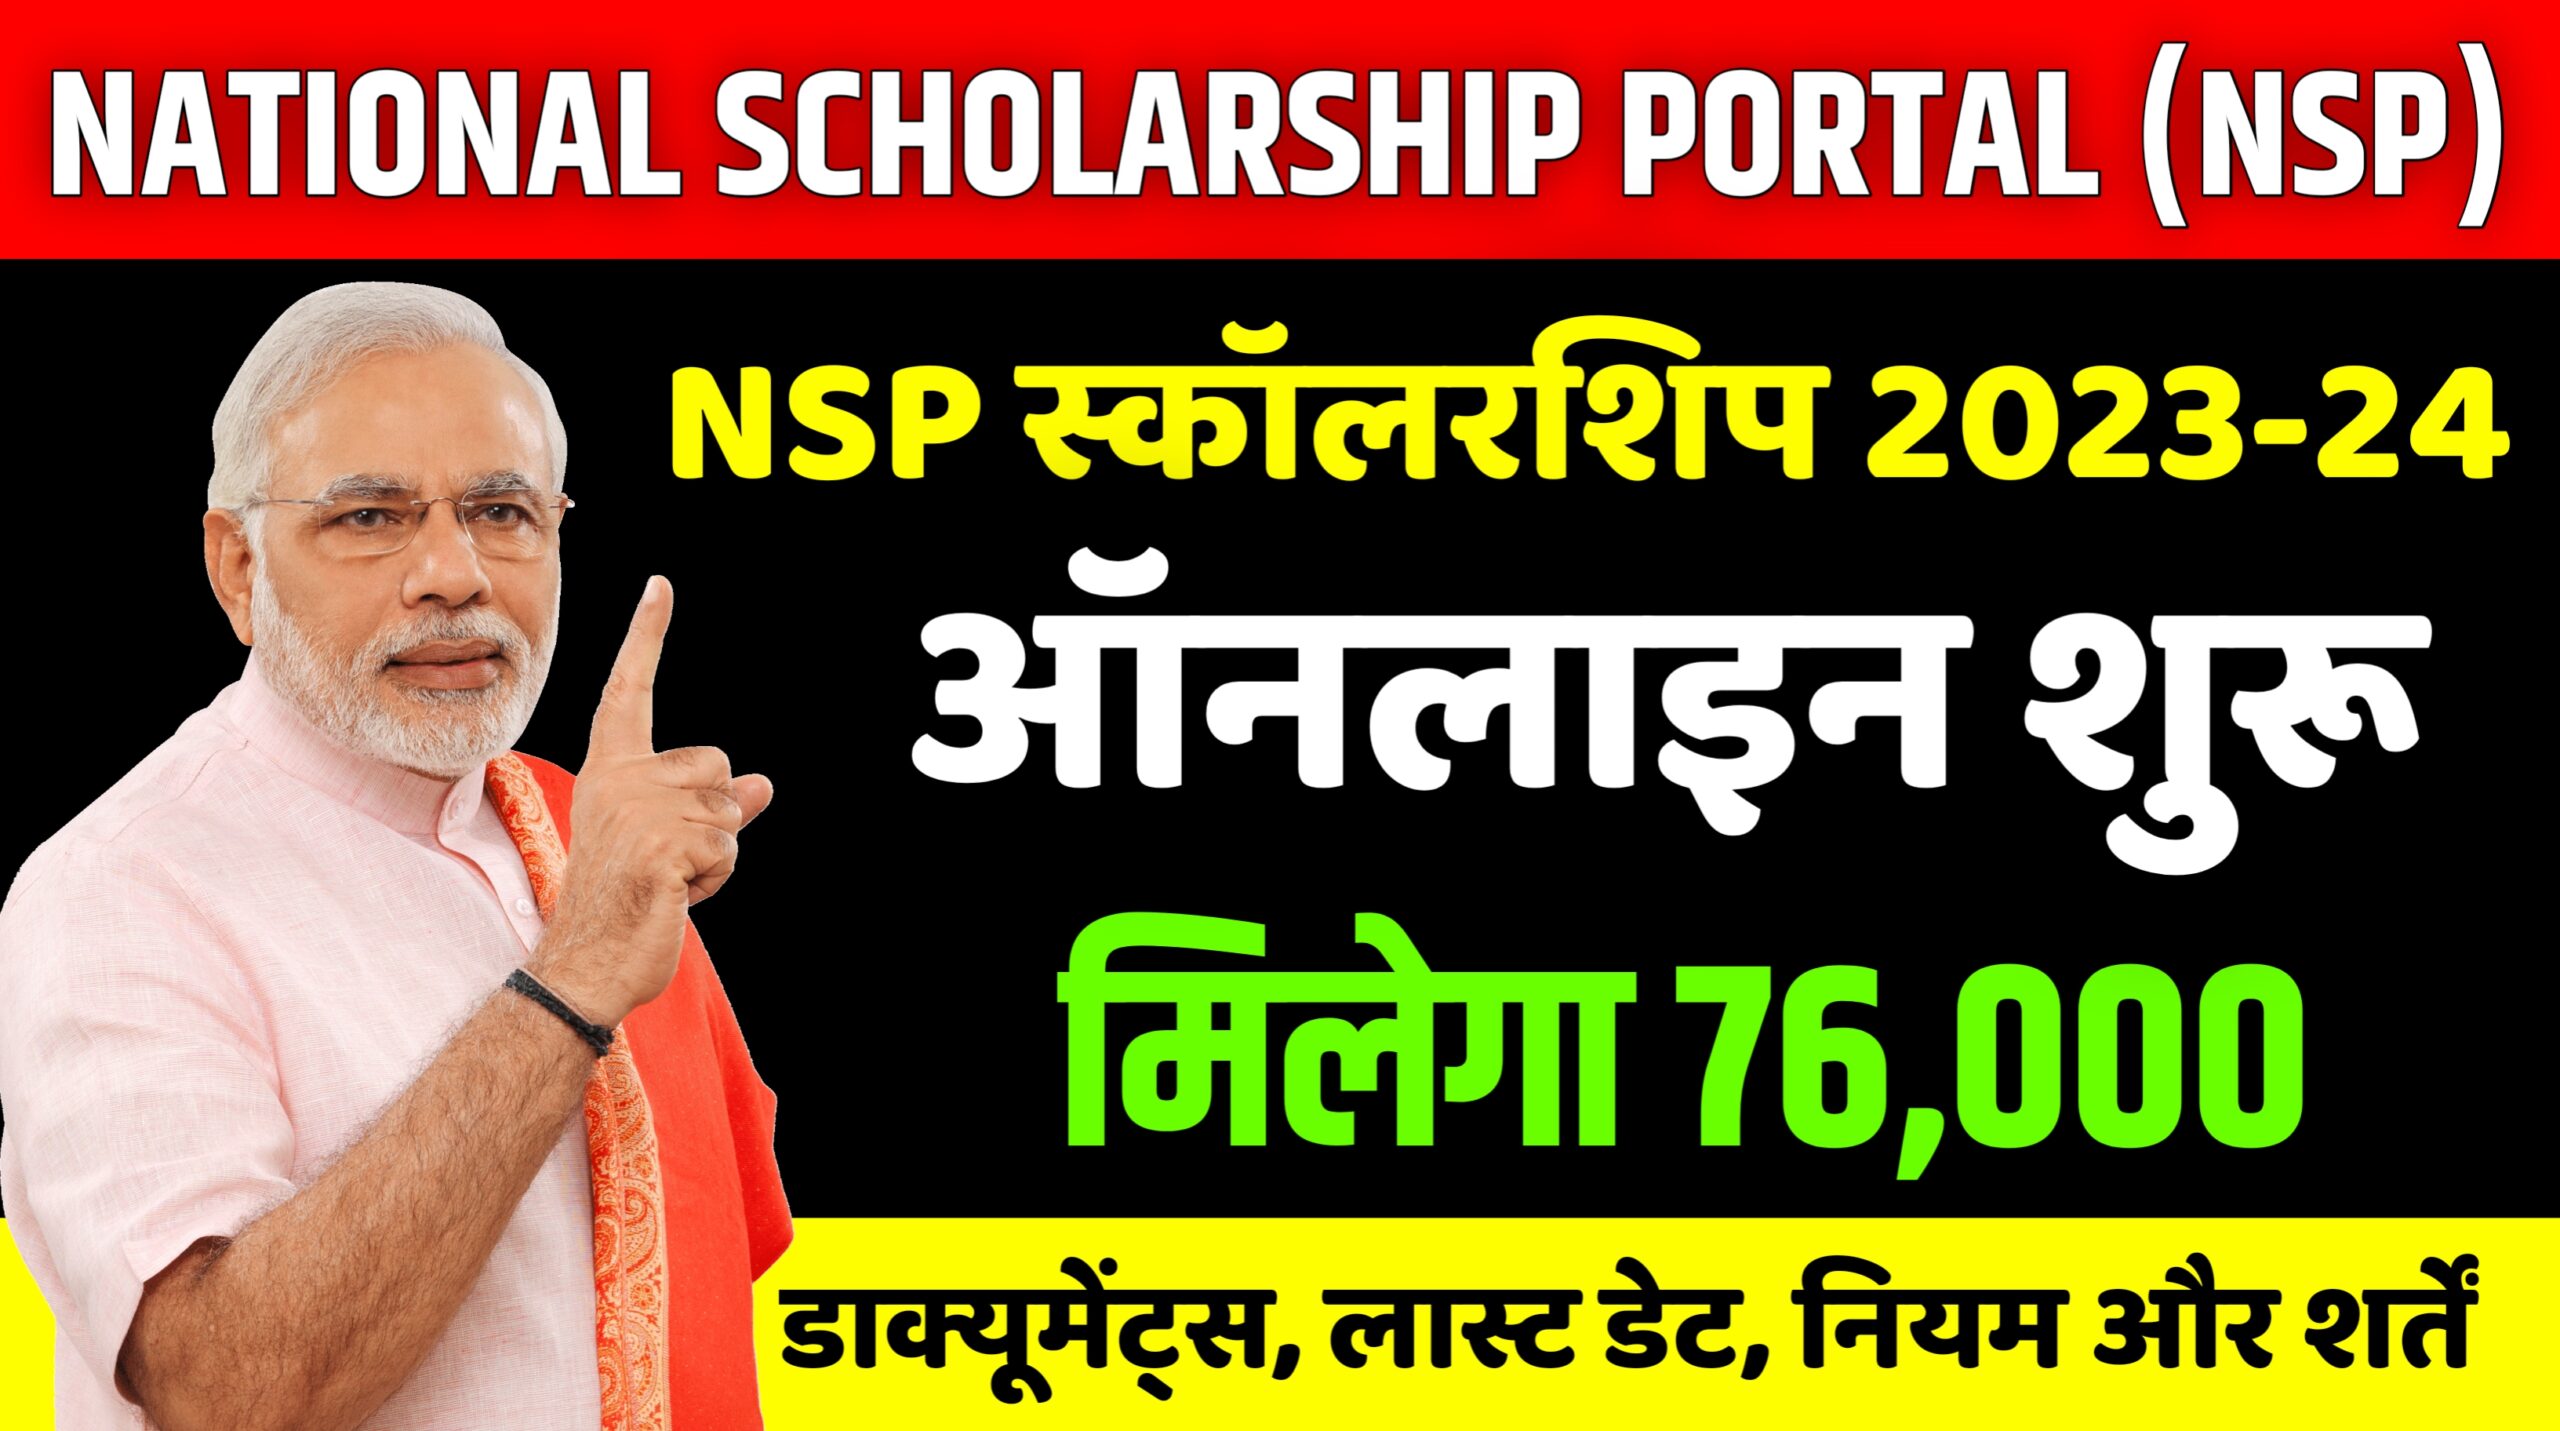 nsp scholarship 2023-24 online apply started